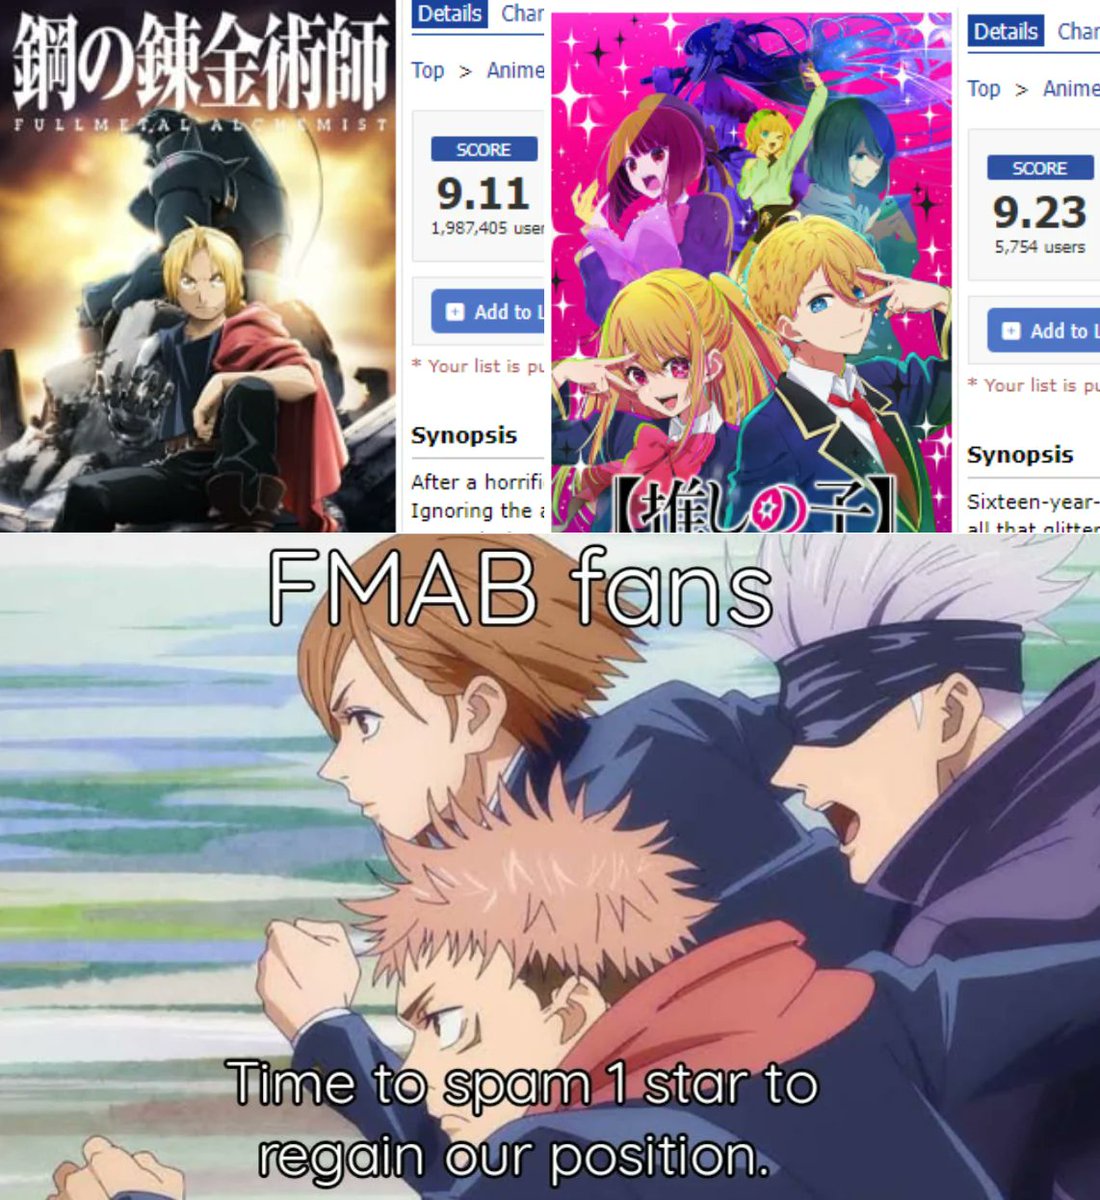 Memes Animes - Memes Animes added a new photo.